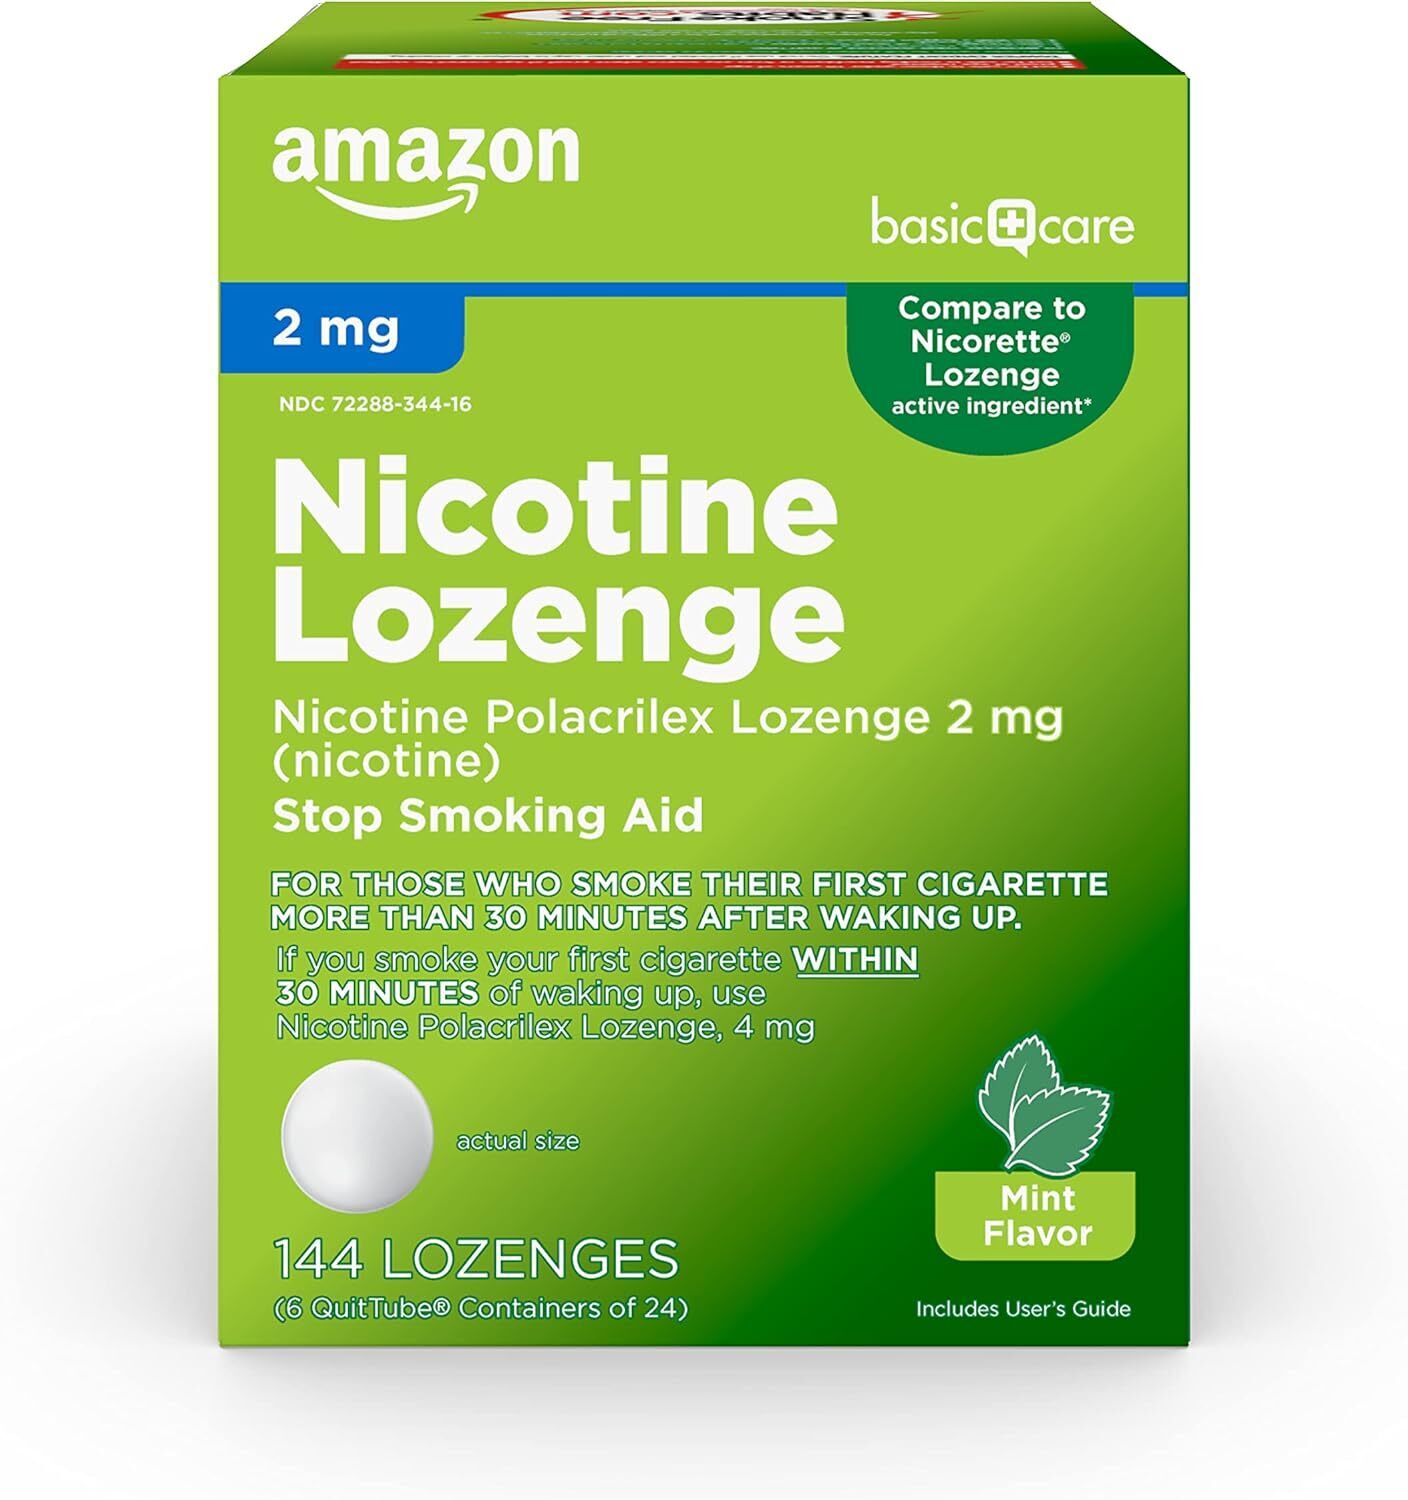 Amazon Basic Care 2 mg (nicotine), Stop Smoking Aid, Mint Flavor, 144 Count